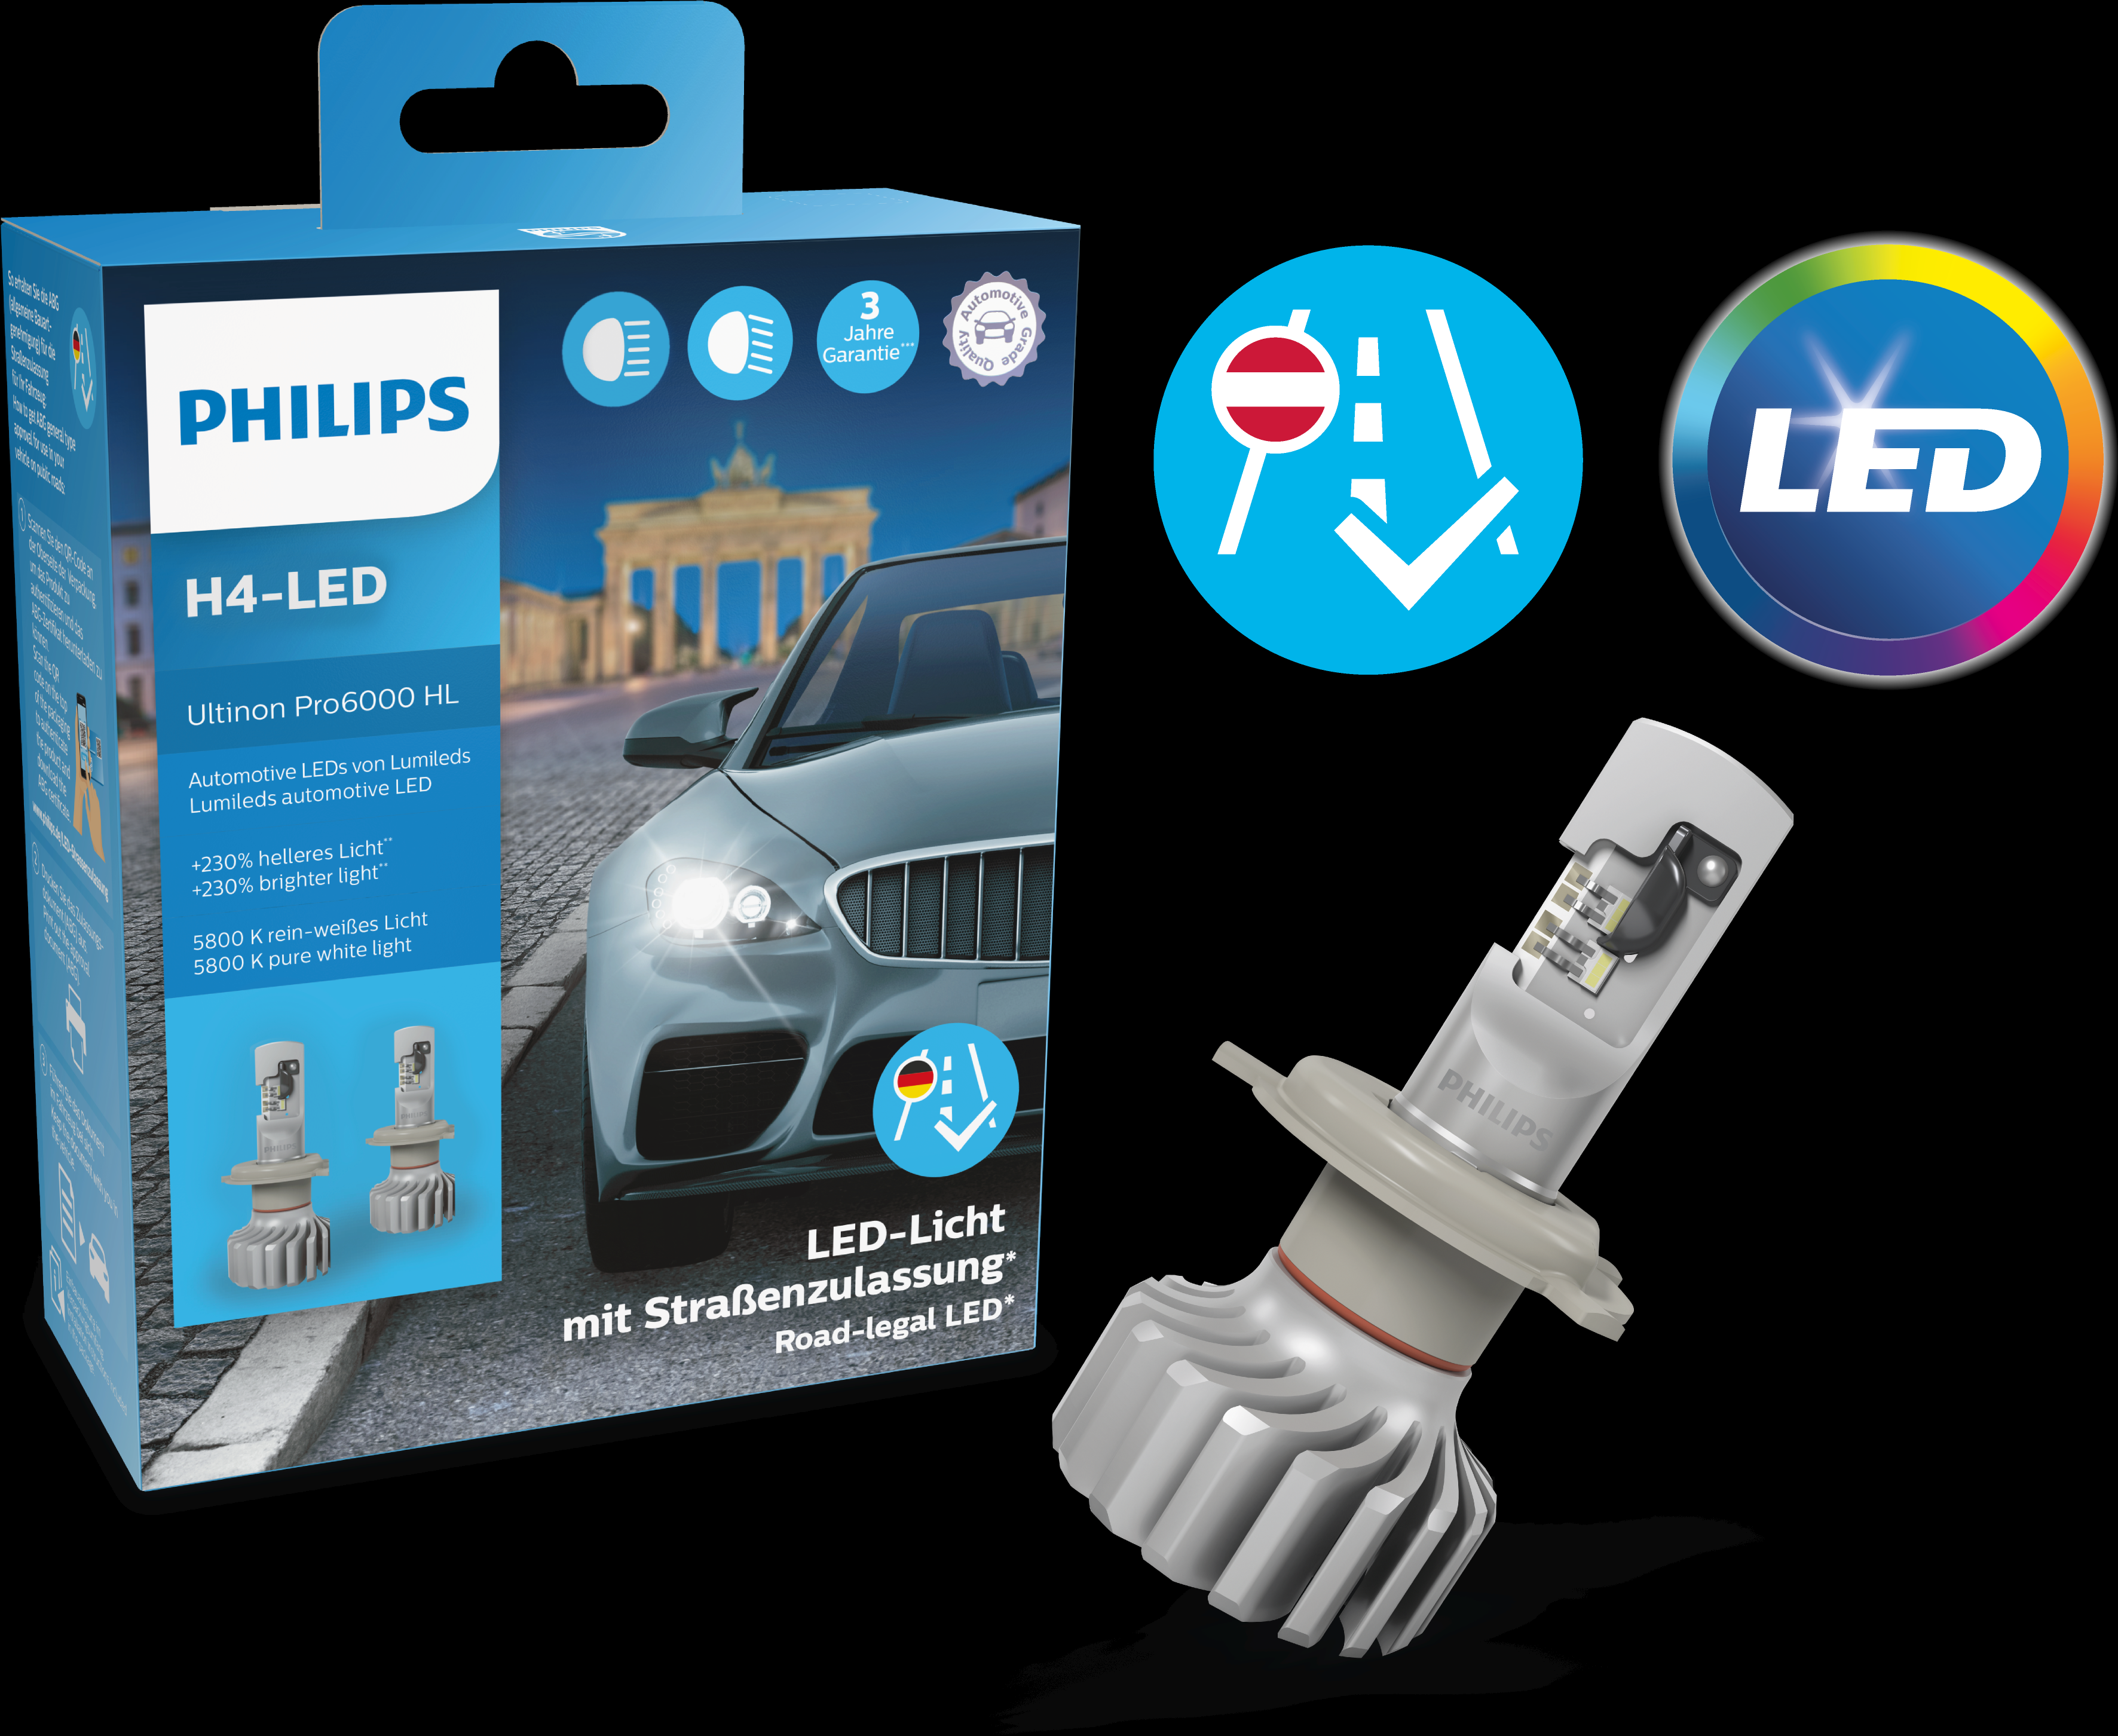 Philips Ultinon Pro6000 H7 LED Headlight Bulb Road Legal, 230